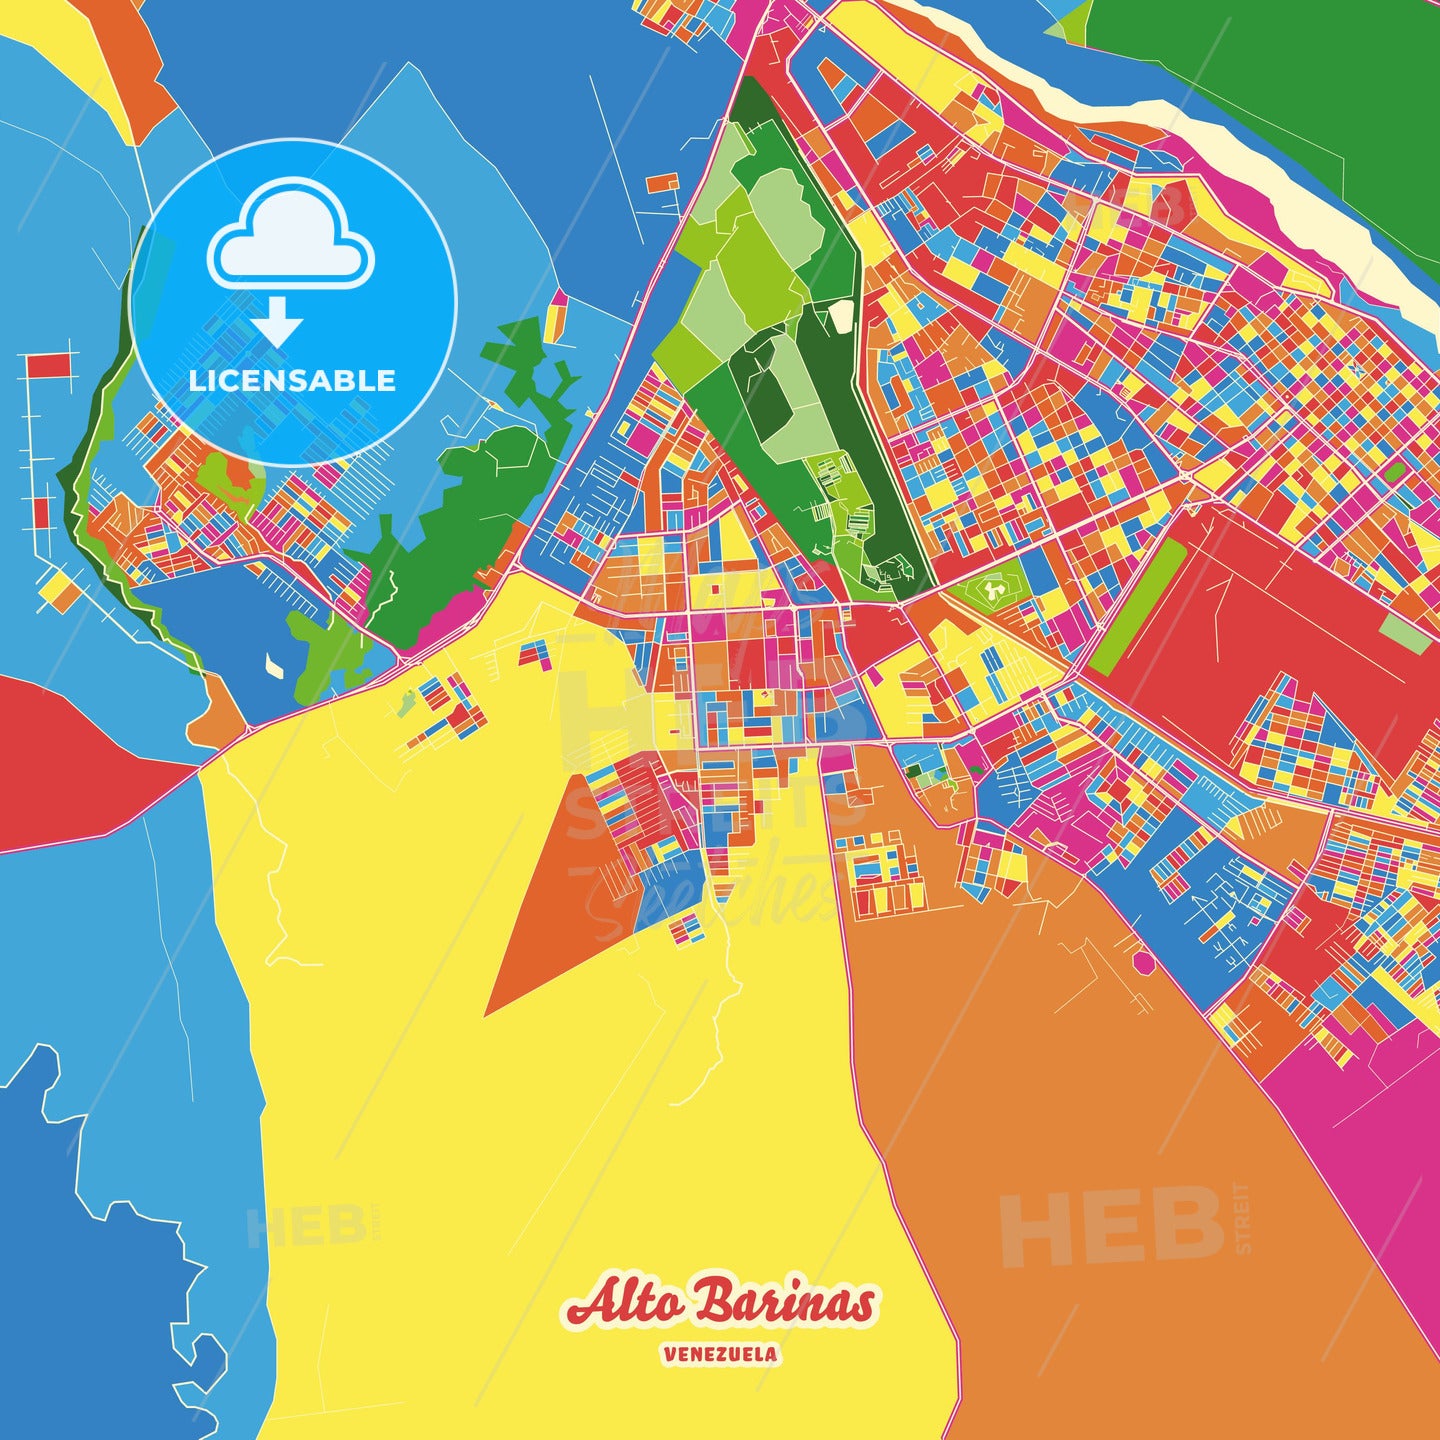 Alto Barinas, Venezuela Crazy Colorful Street Map Poster Template - HEBSTREITS Sketches